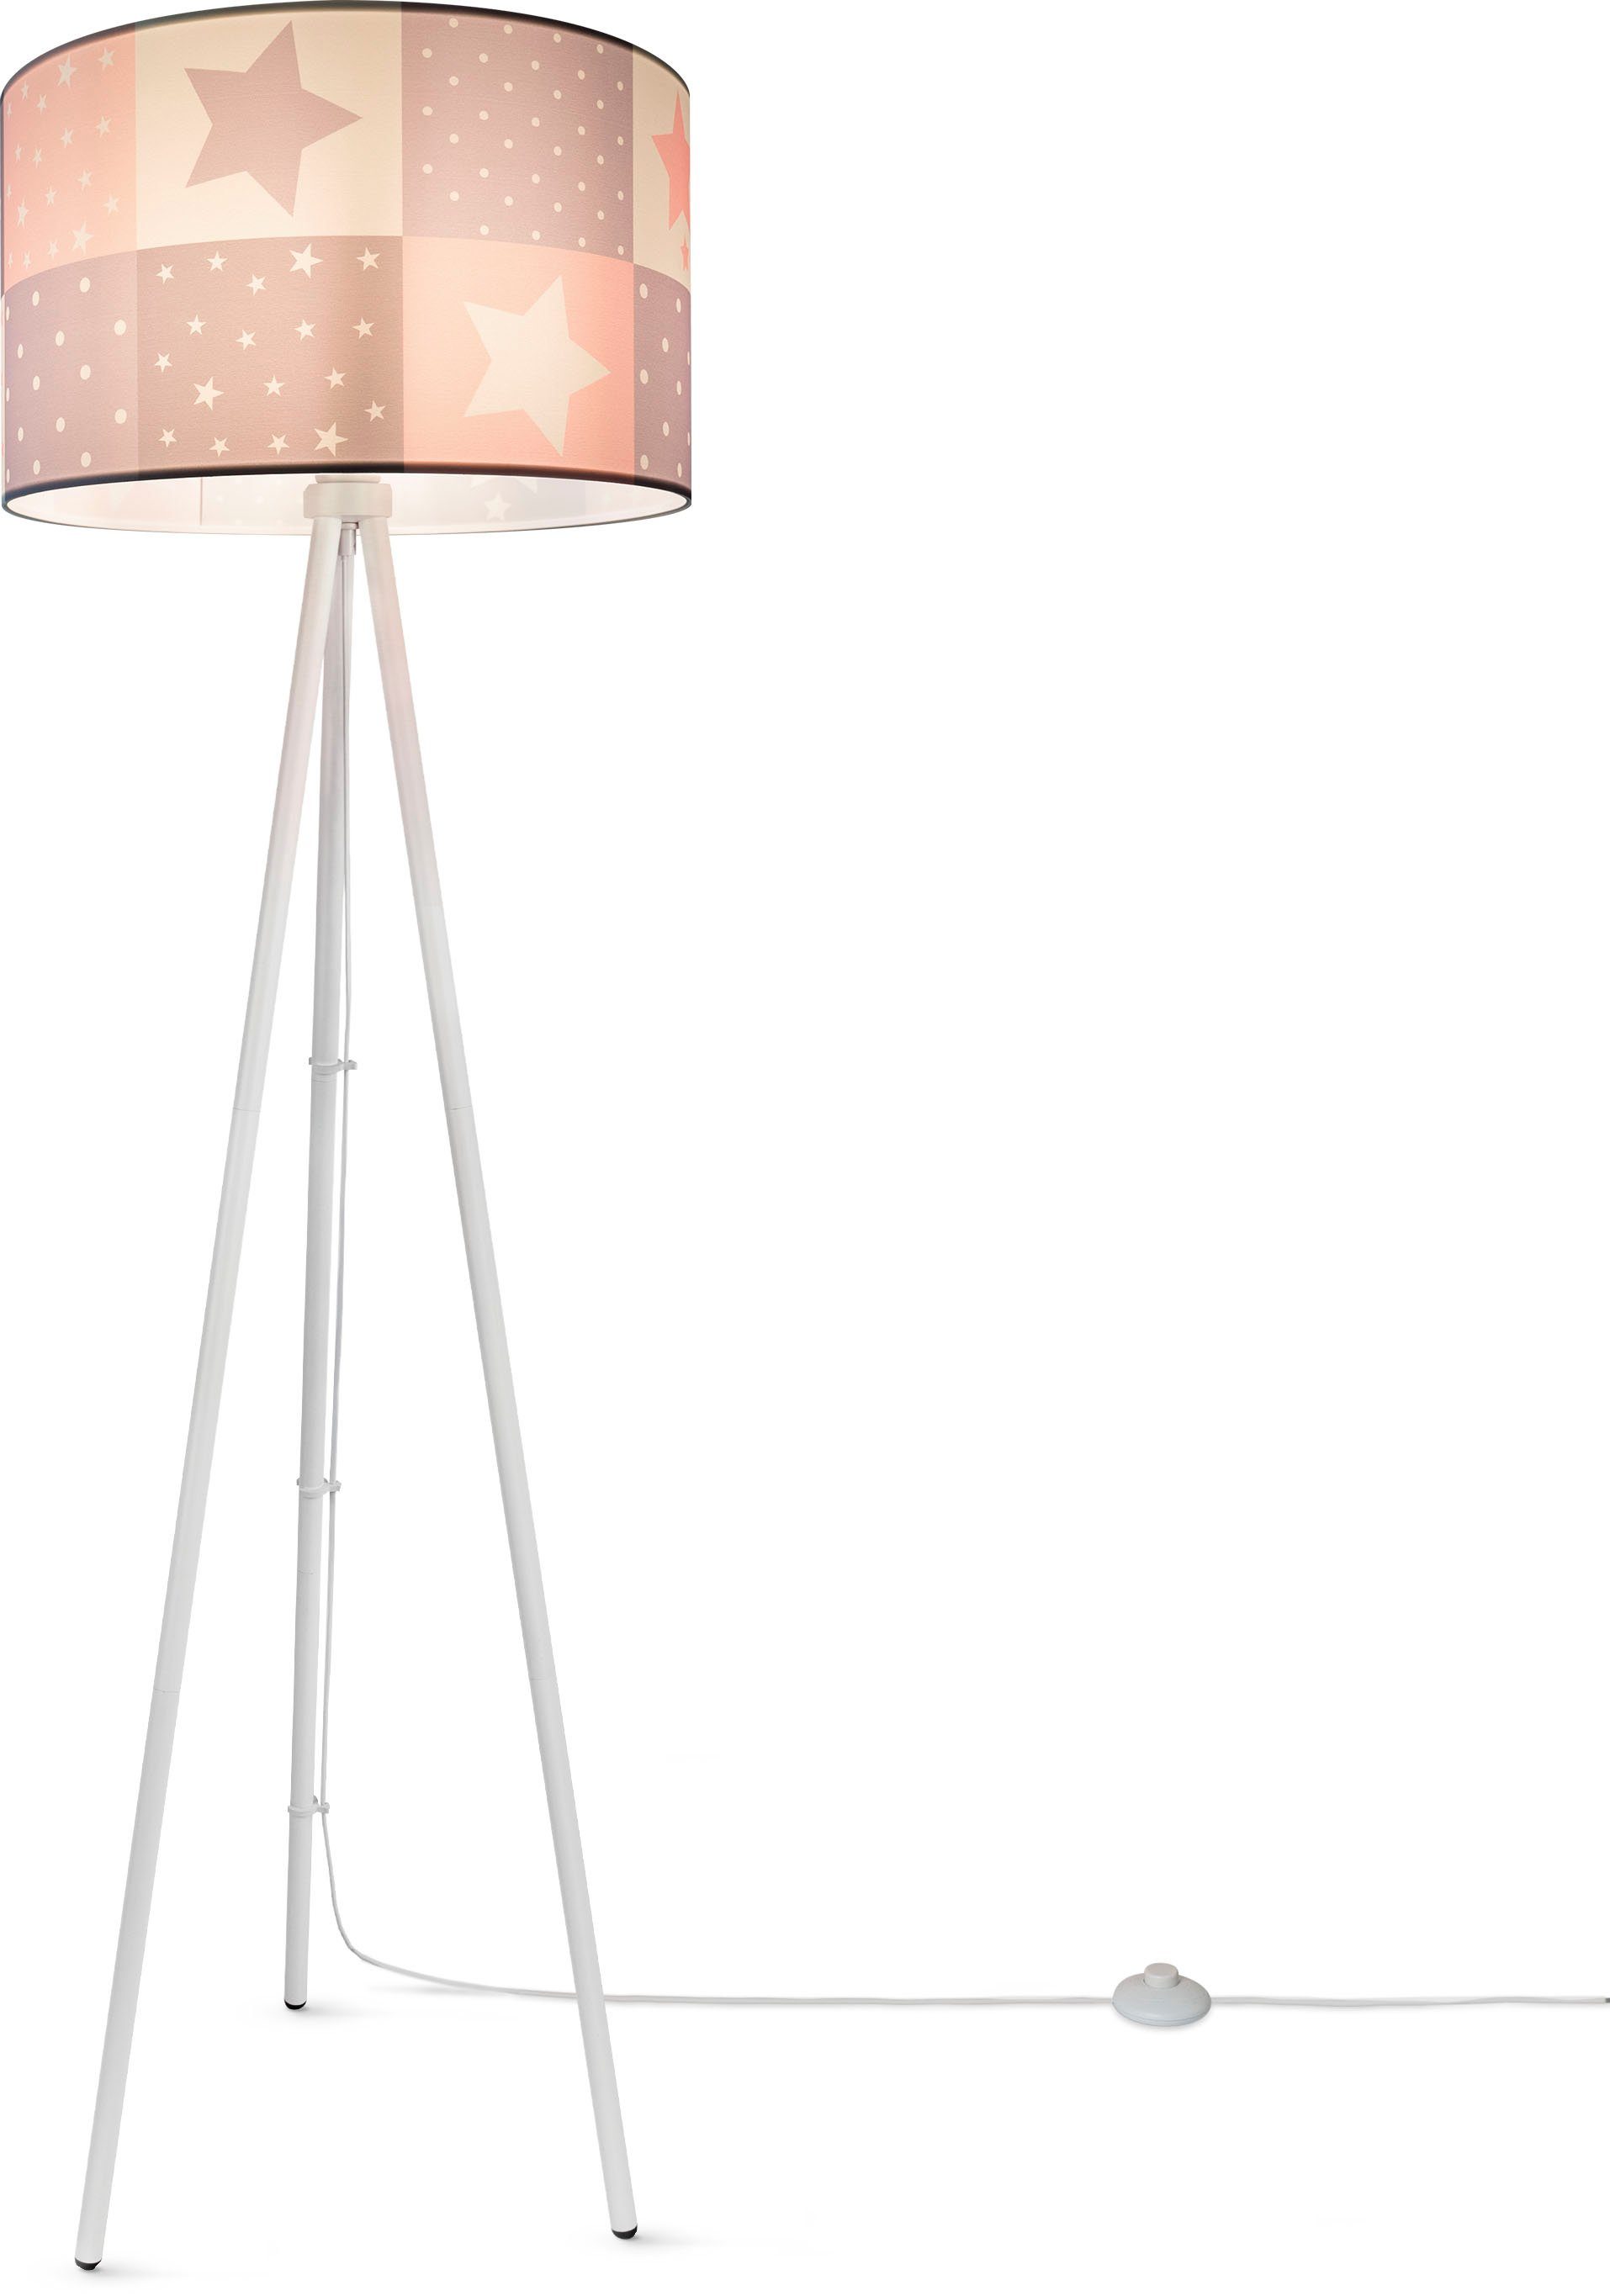 Paco Home Stehlampe ohne Stehleuchte Kinderlampe Cosmo, Sternen Trina Kinderzimmer Motiv, LED Lampe Leuchtmittel, E27